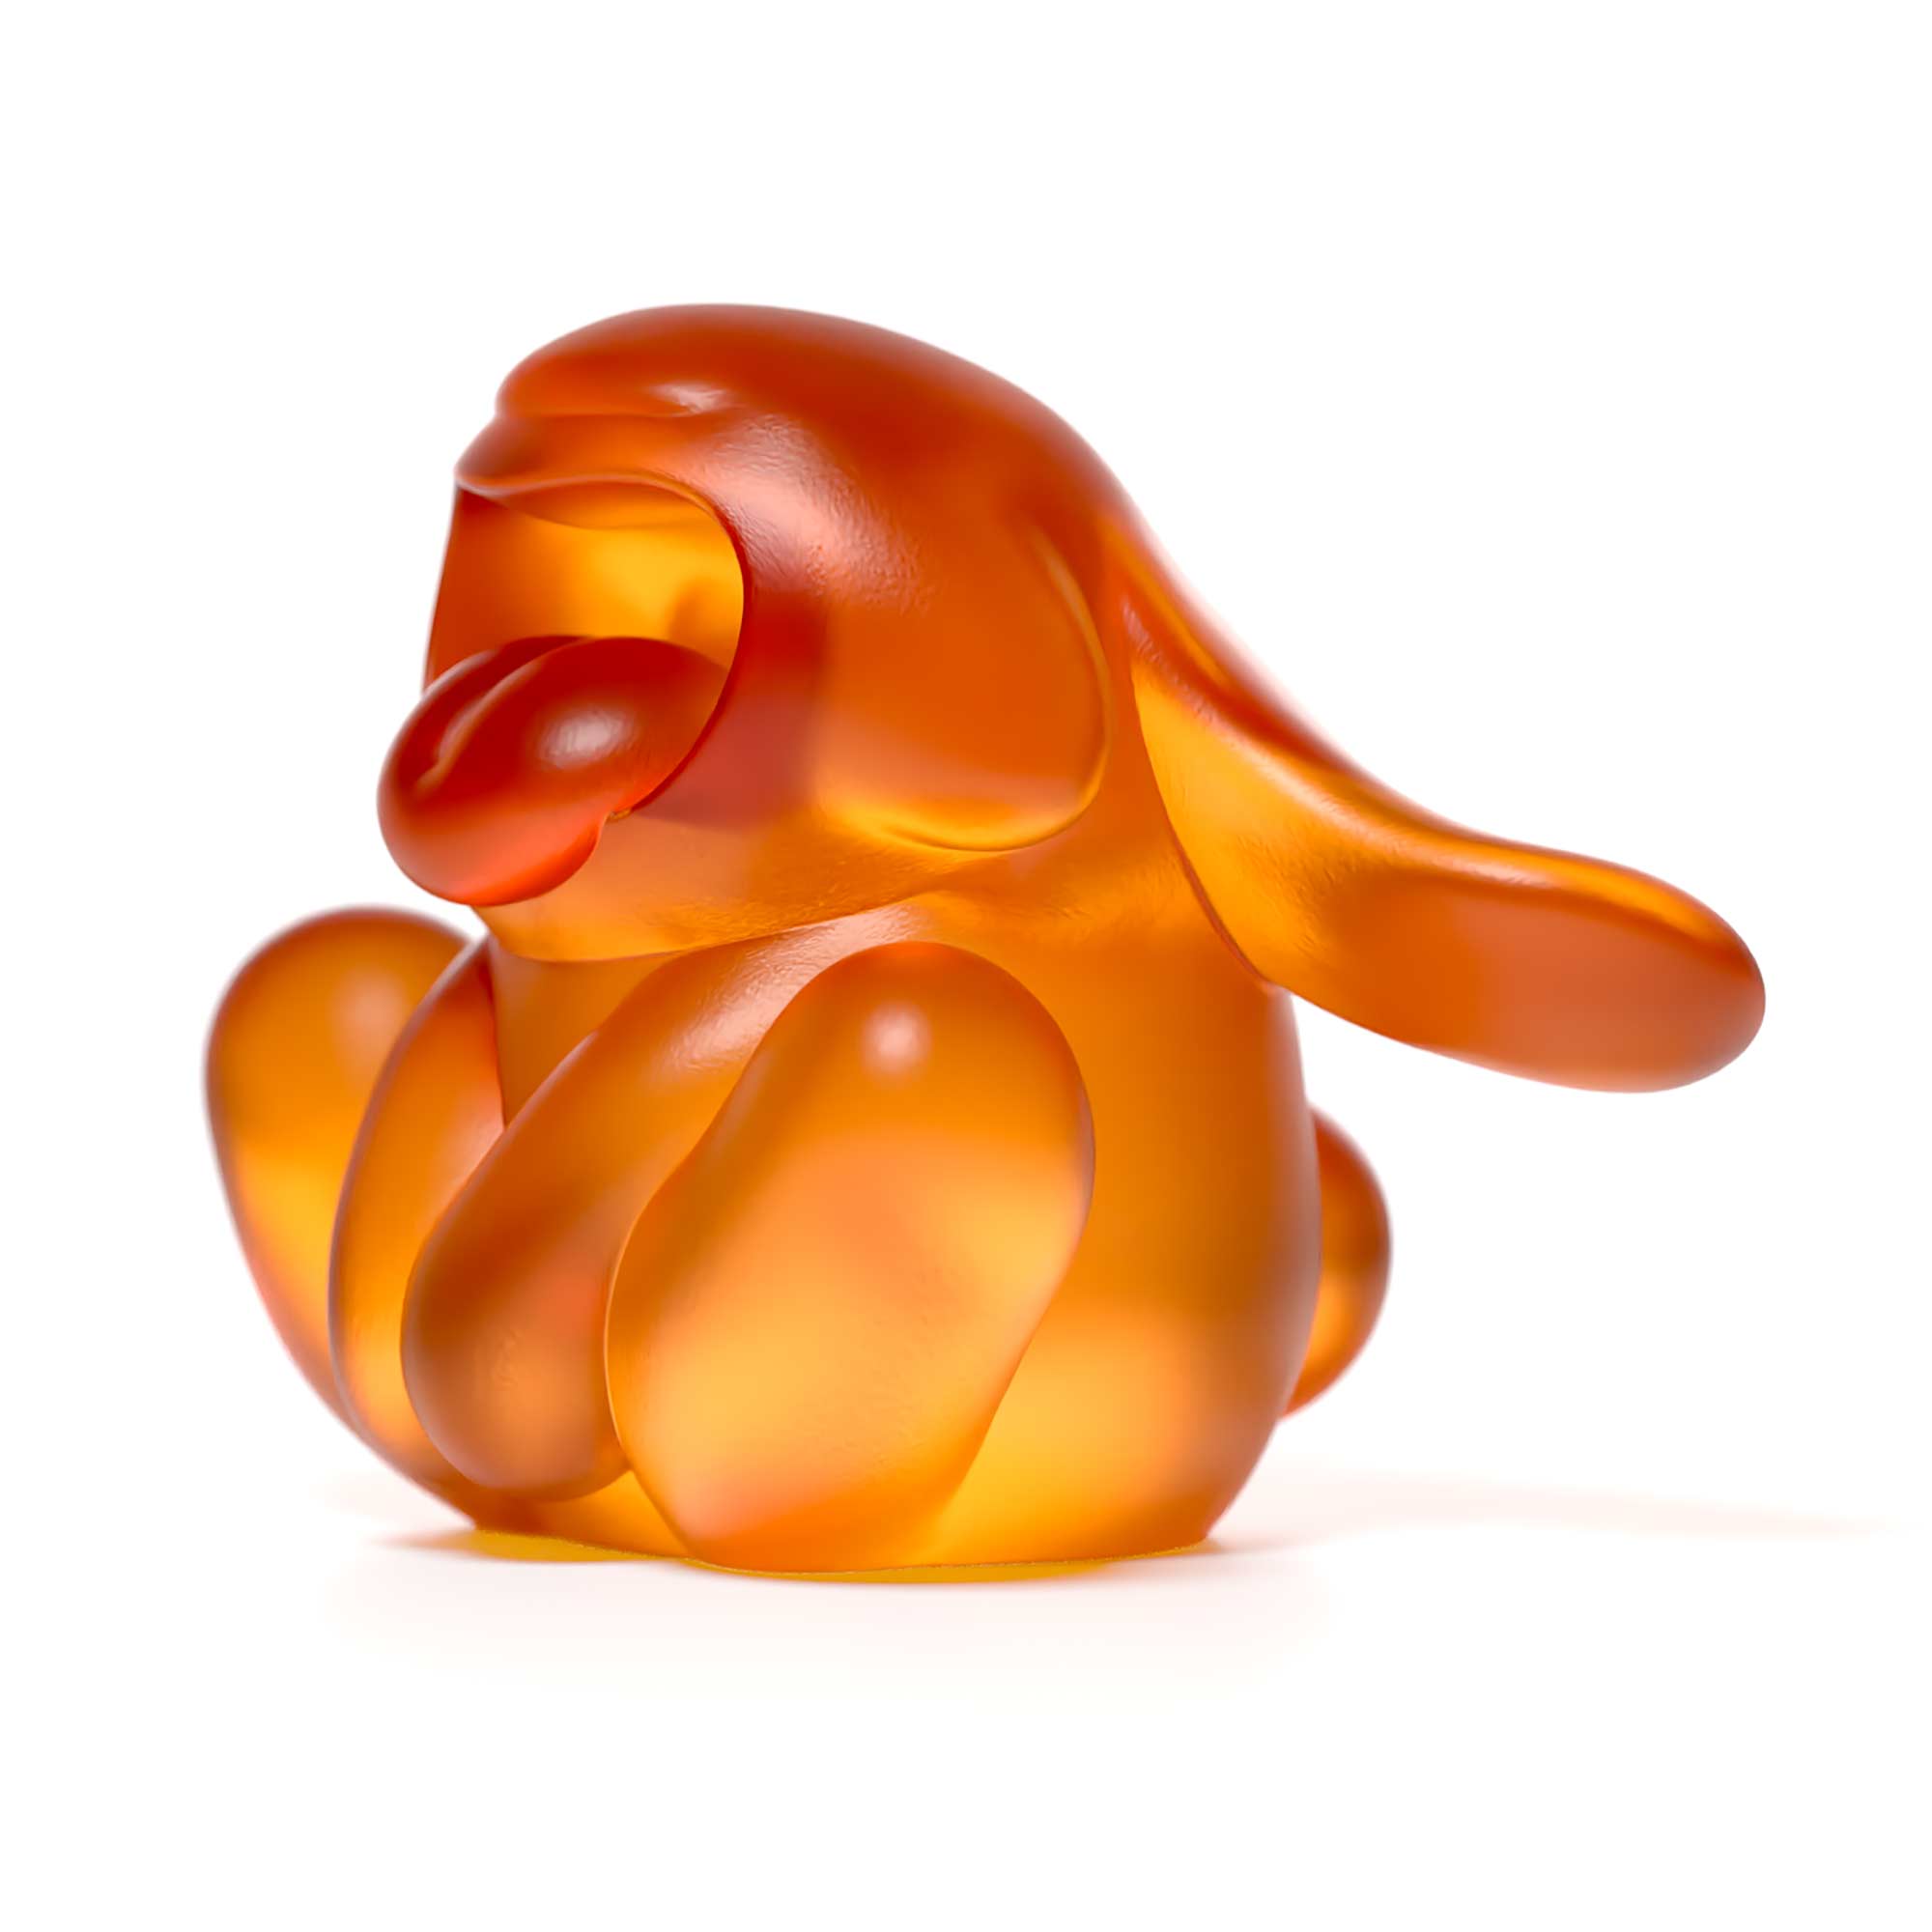 "Bunnie Roar Crystal," a sculpture, amber color, is an artistic creation by Ferdi B Dick 01 